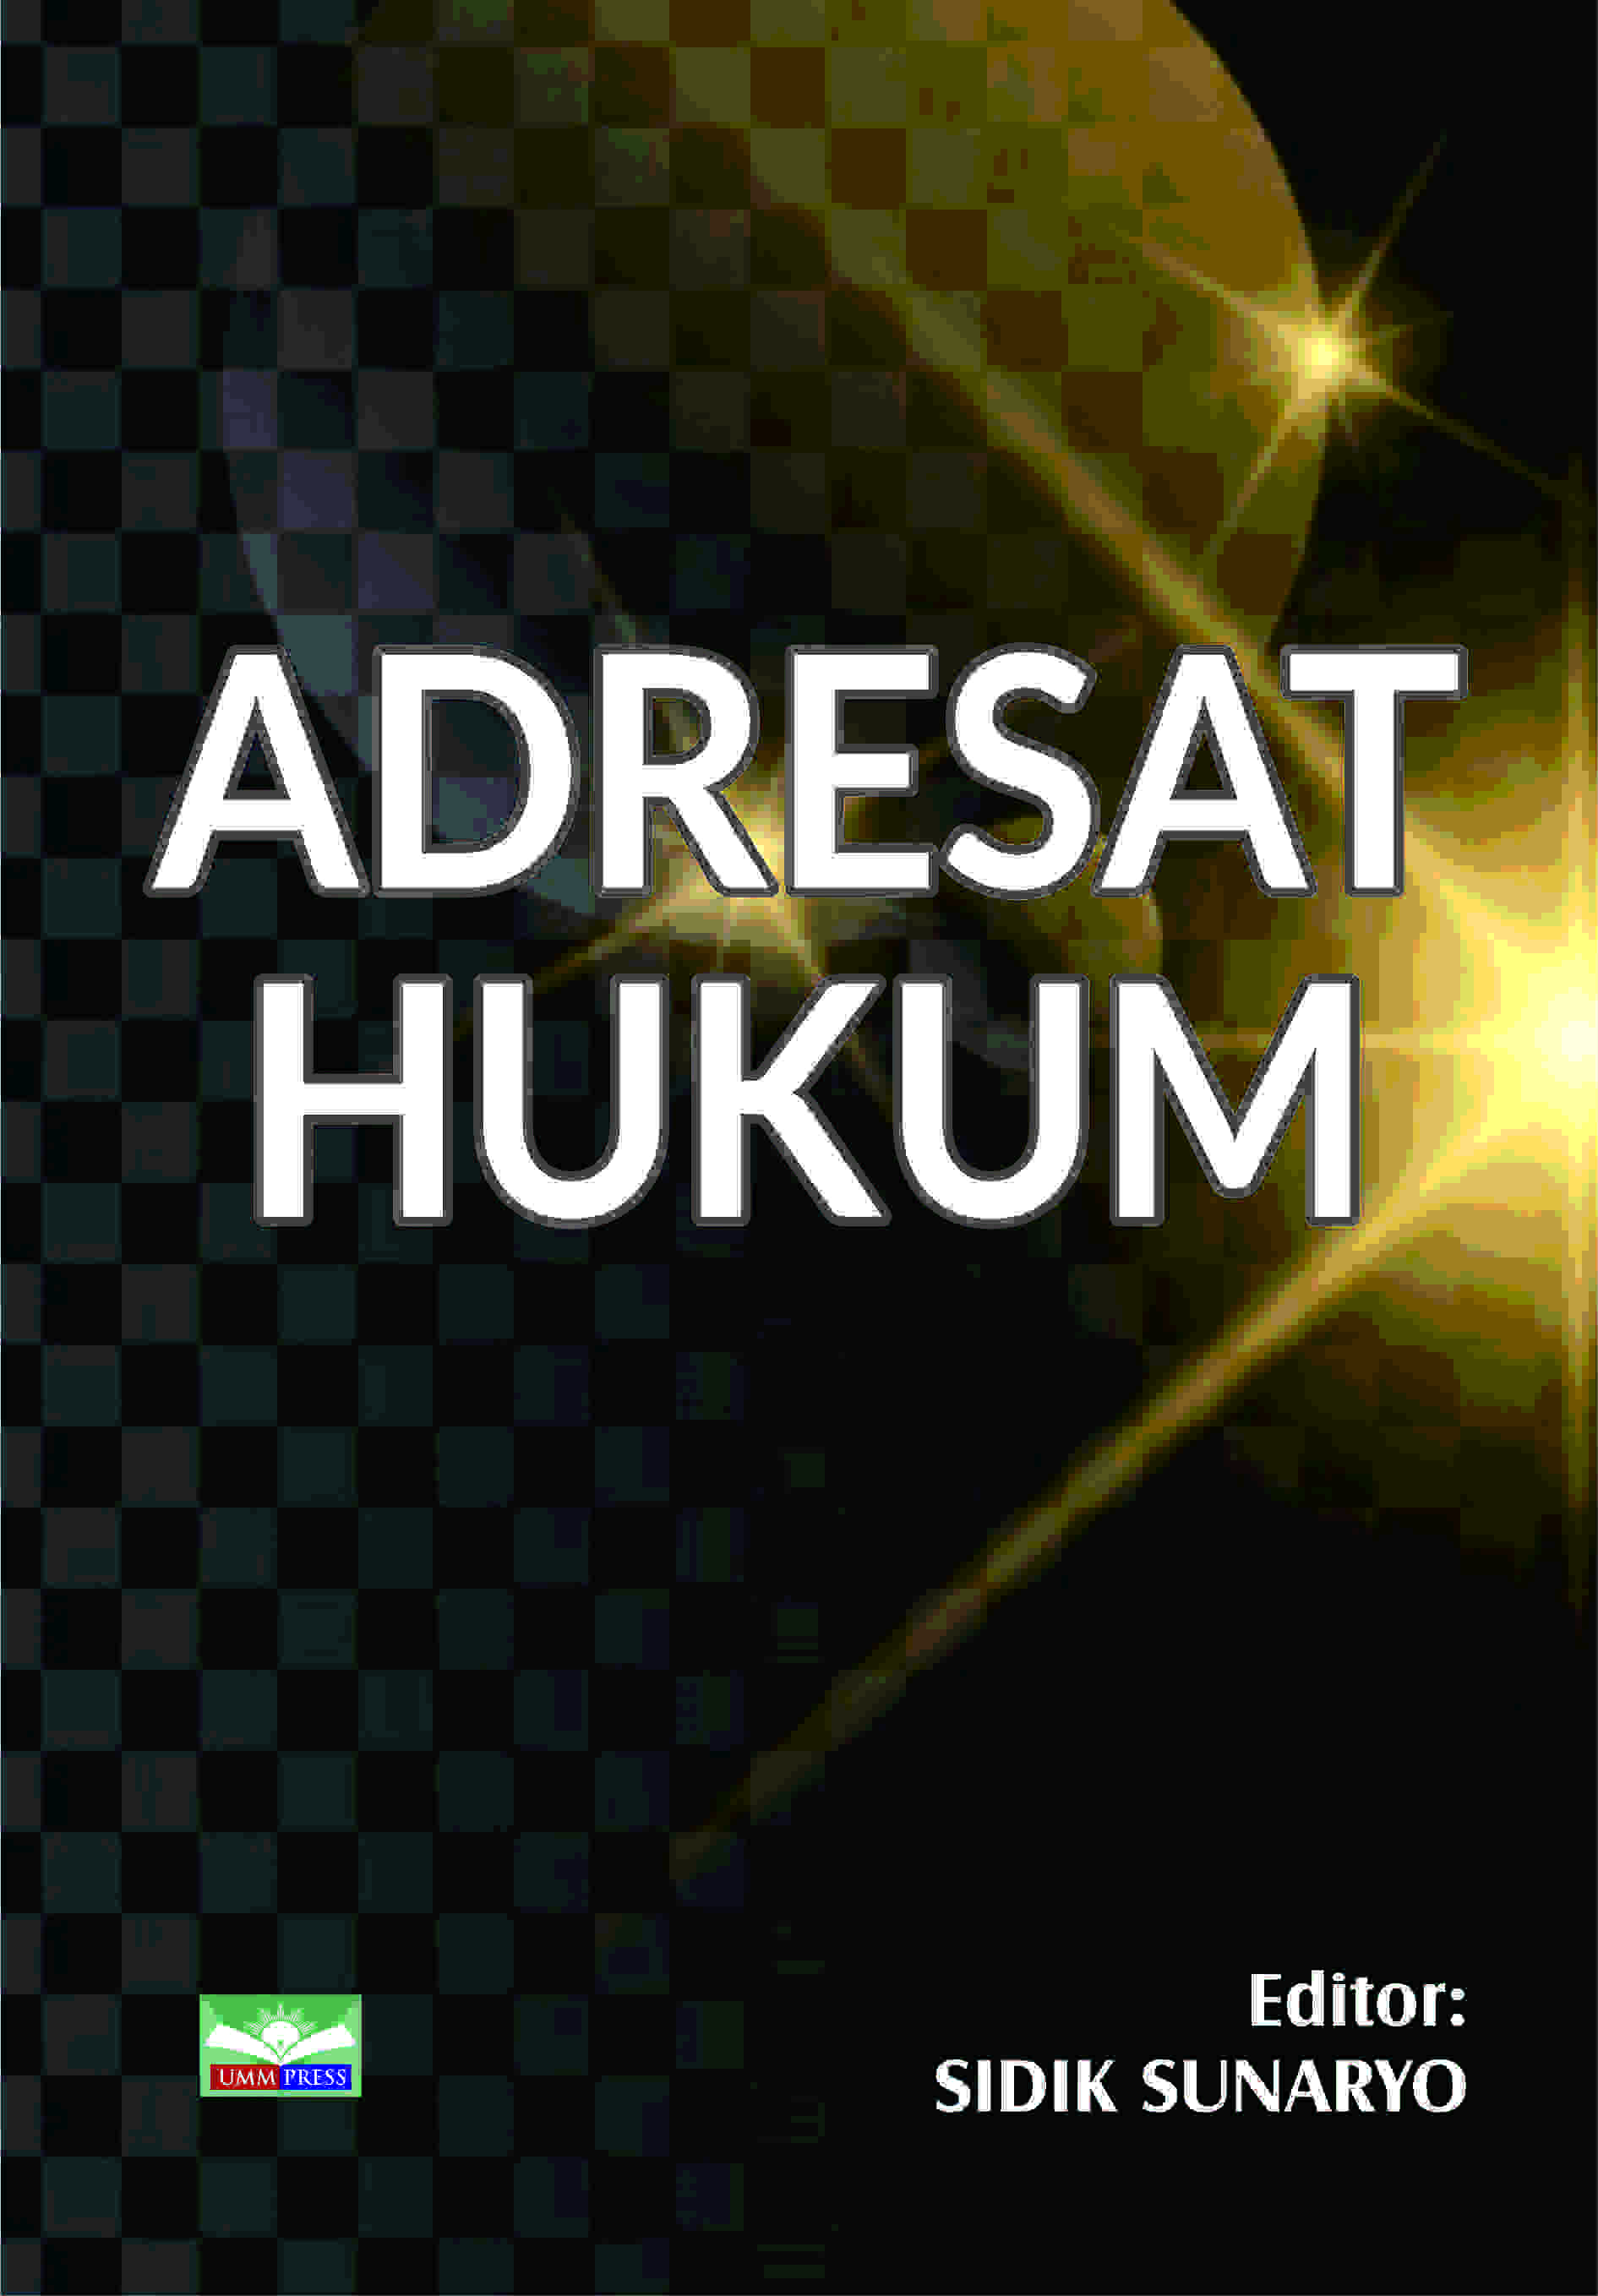 ADRESAT HUKUM